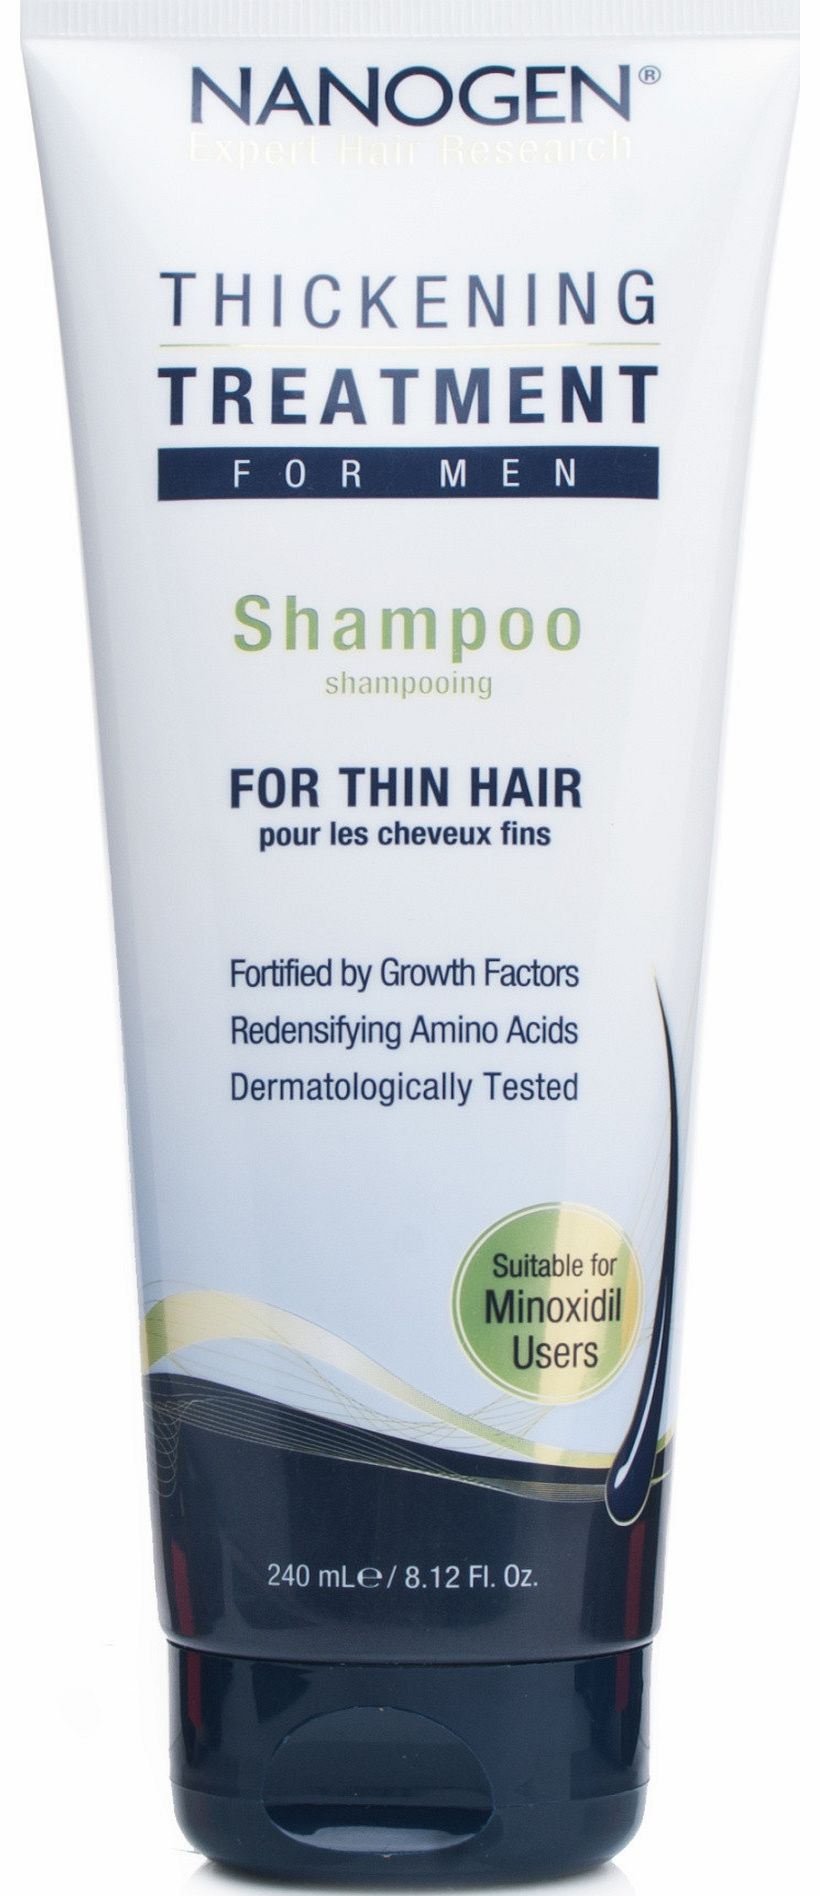 Thickening Treatment Shampoo for Men